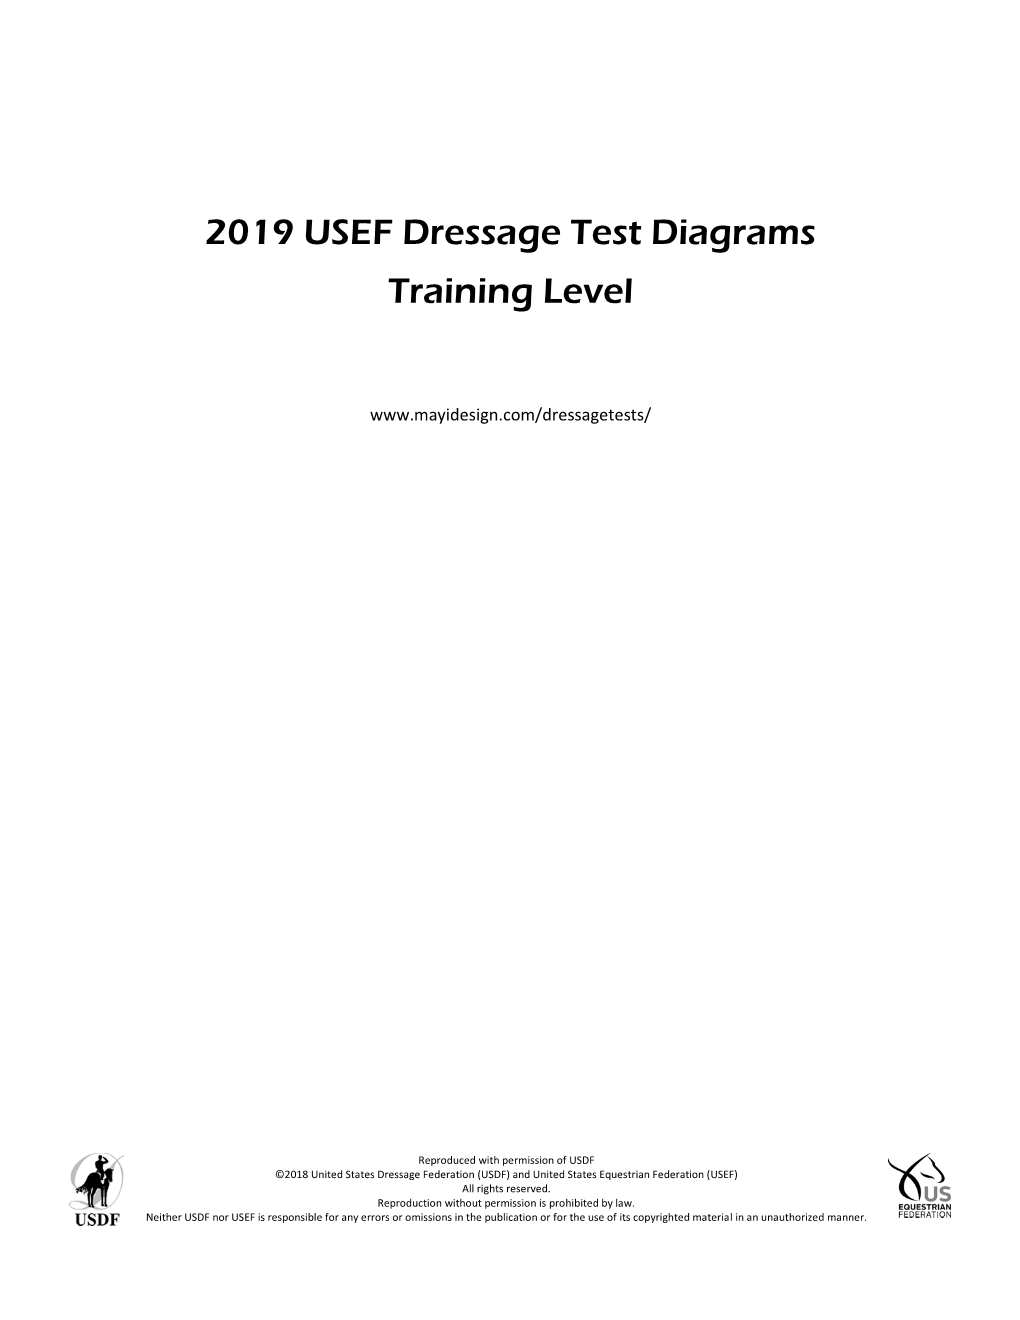 2019 USEF Dressage Test Diagrams Training Level